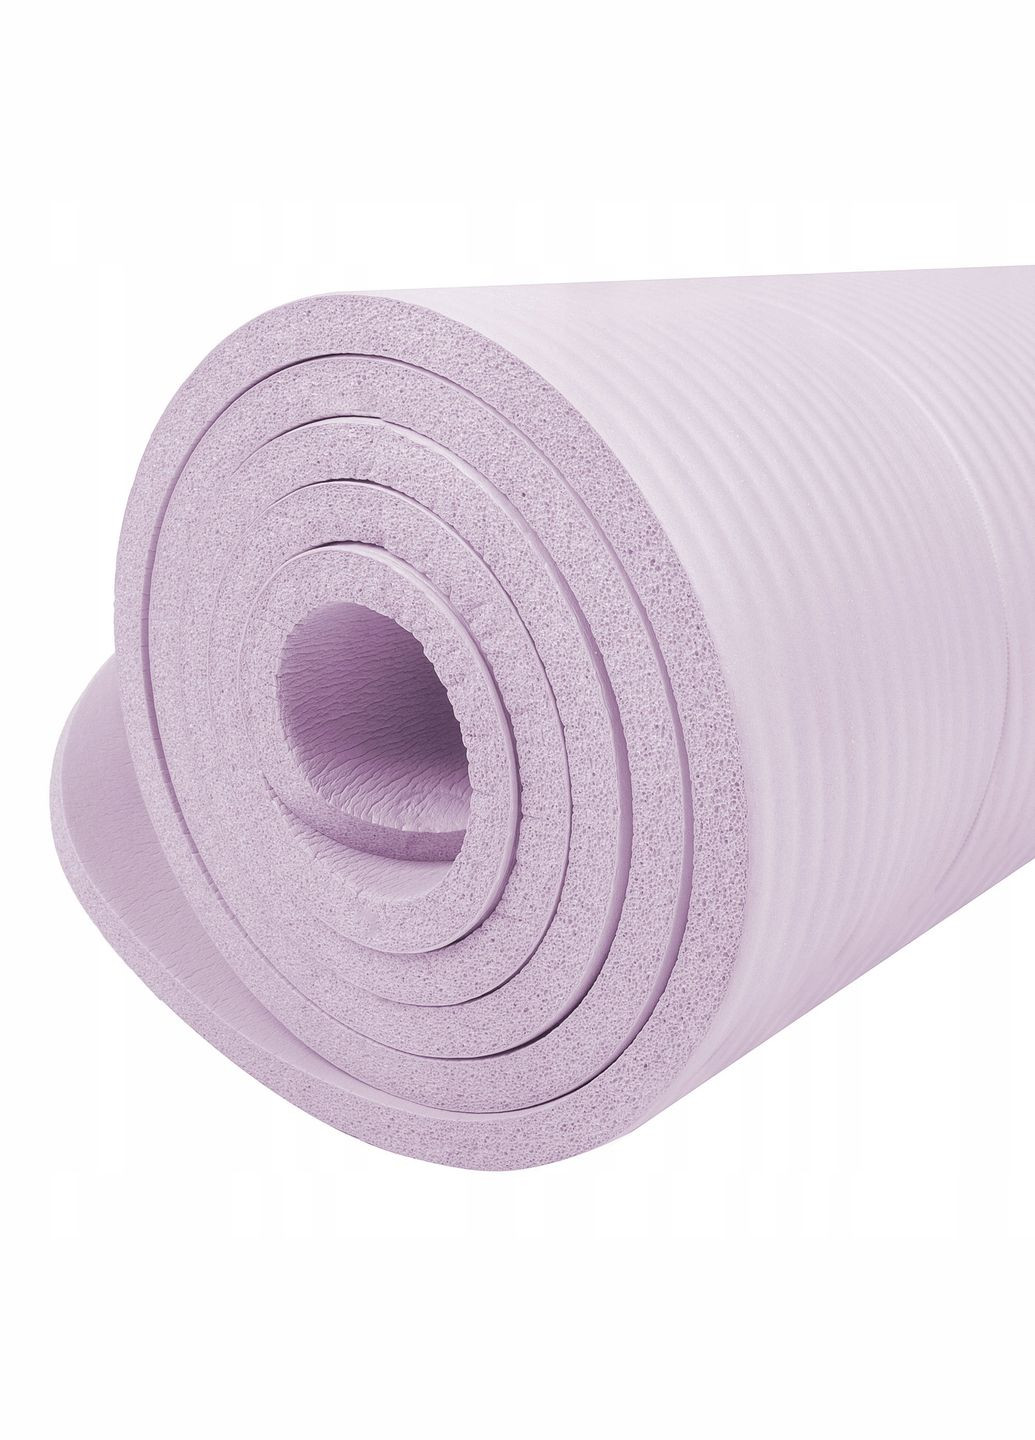 Коврик (мат) для йоги та фітнесу NBR 1 см Purple Springos yg0038 (275095464)